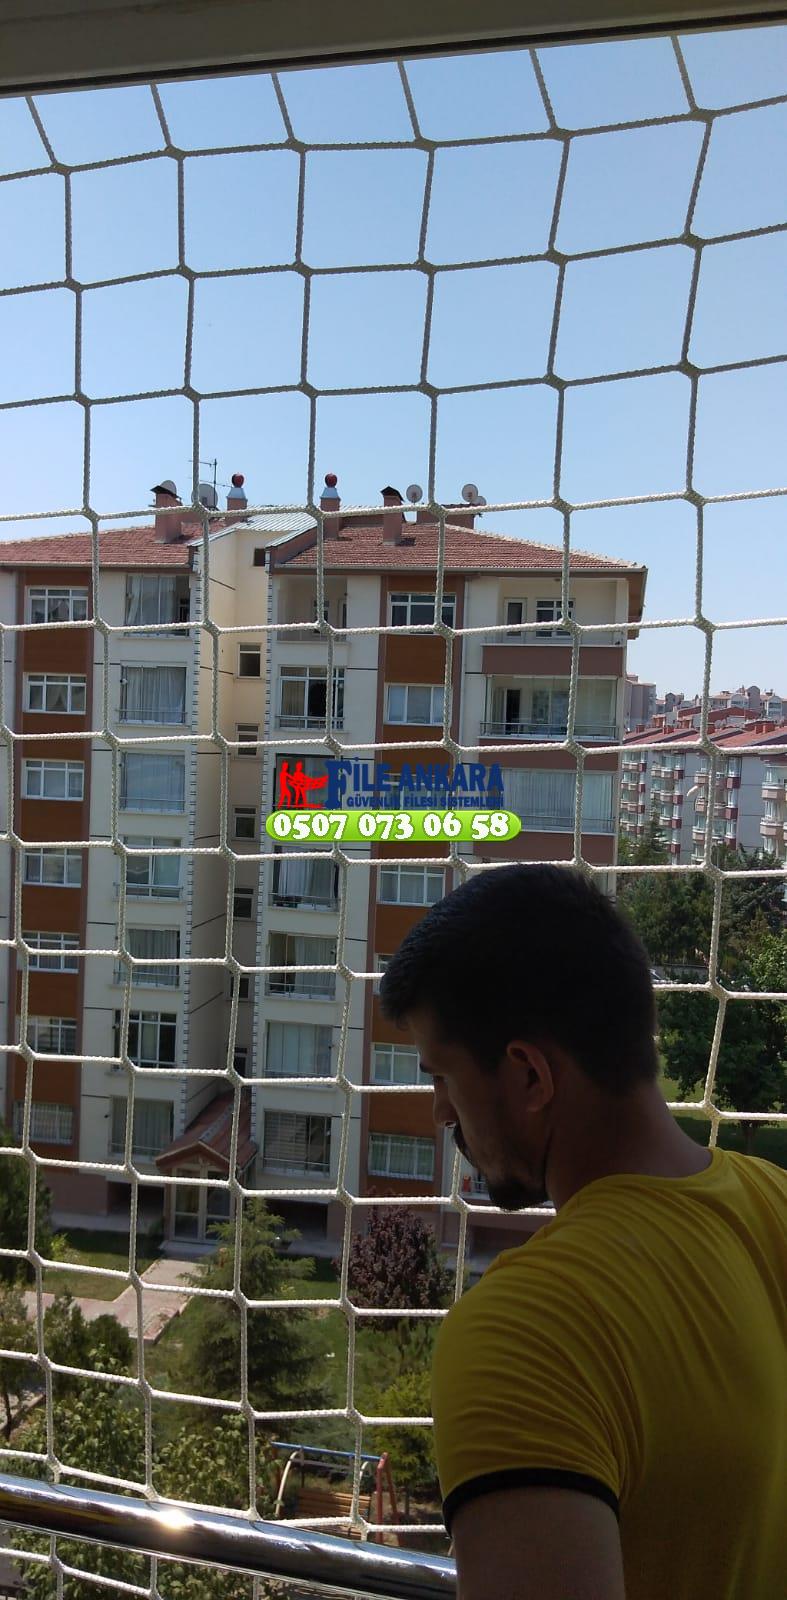 Ankara Balkon Filesi Kuş Filesi Teras Filesi Merdiven Filesi Apartman Filesi 0507 073 06 58